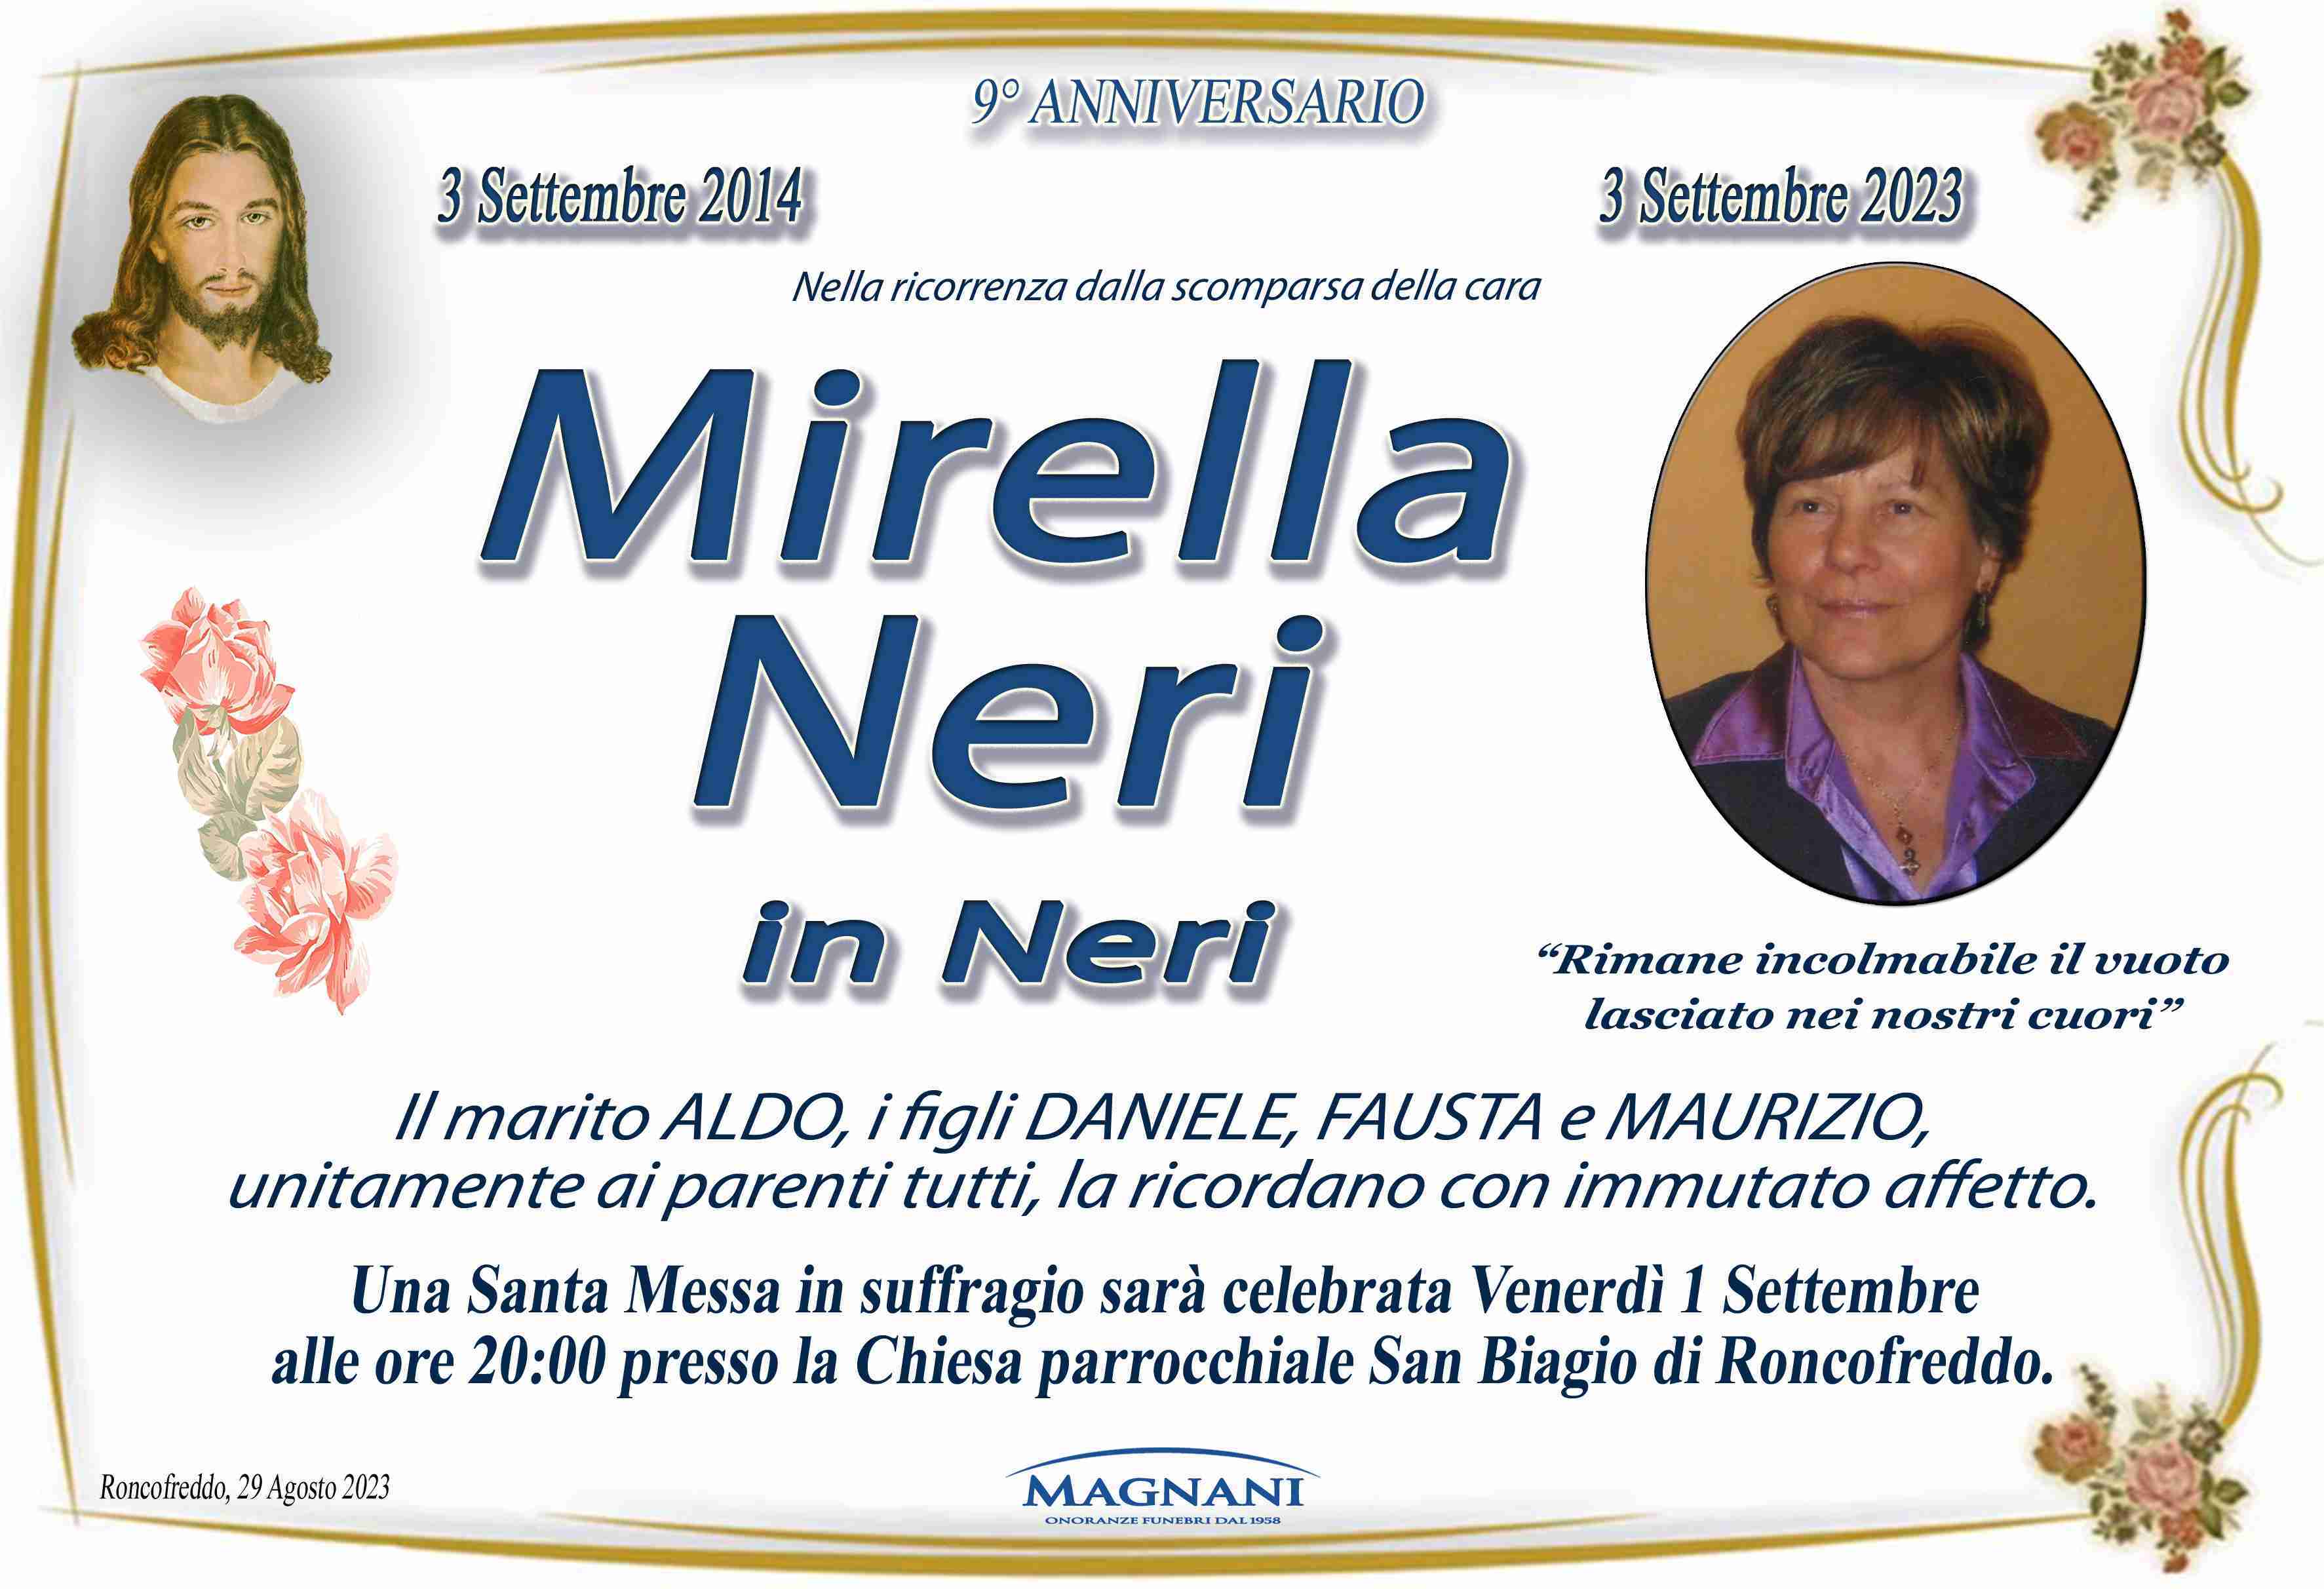 Mirella Neri